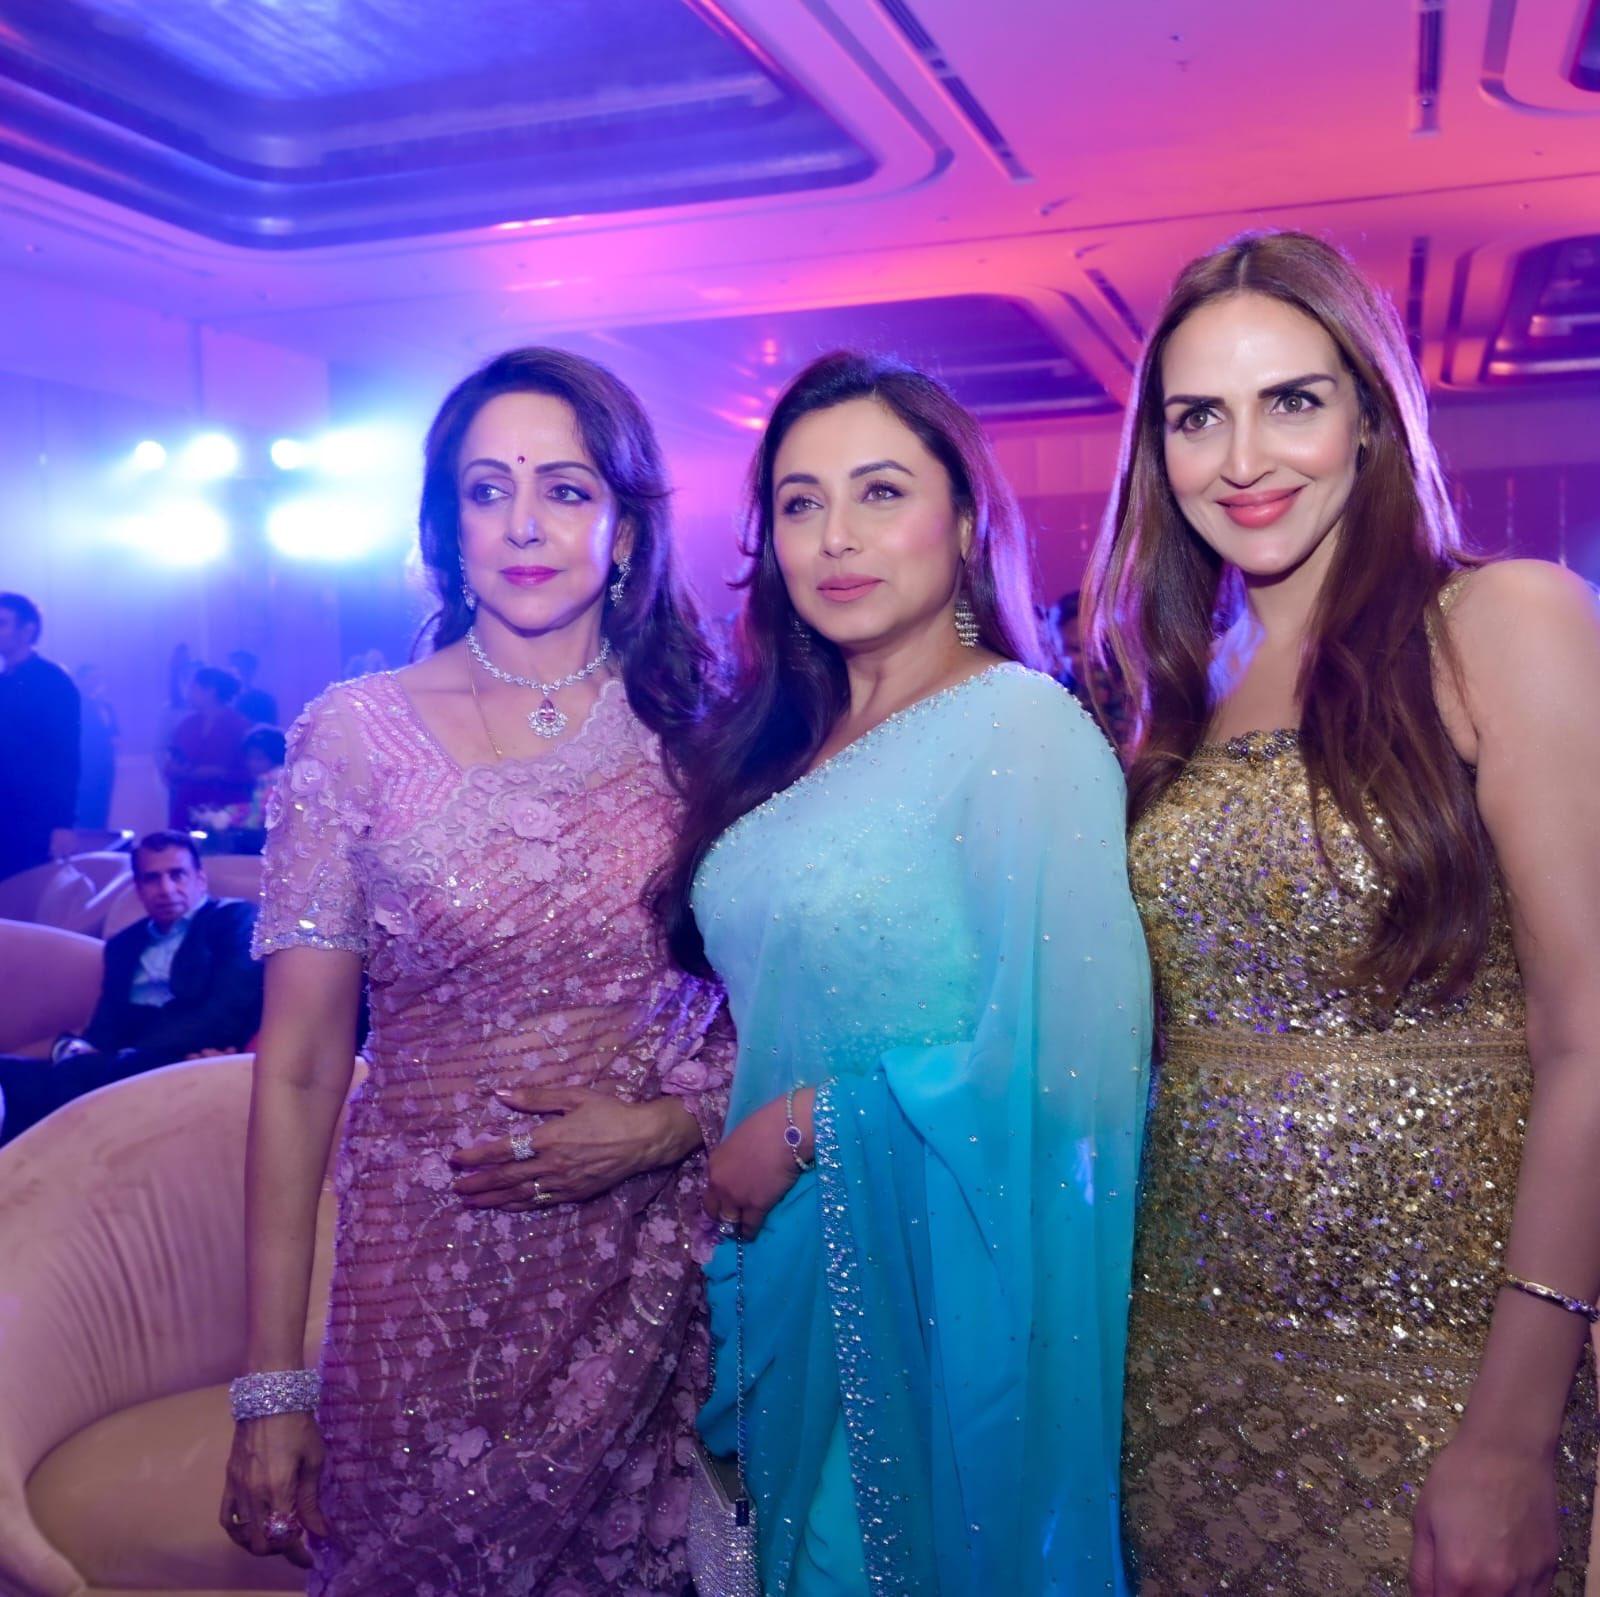 Hema Malini looked gorgeous as she posed with Esha and Rani Mukerji